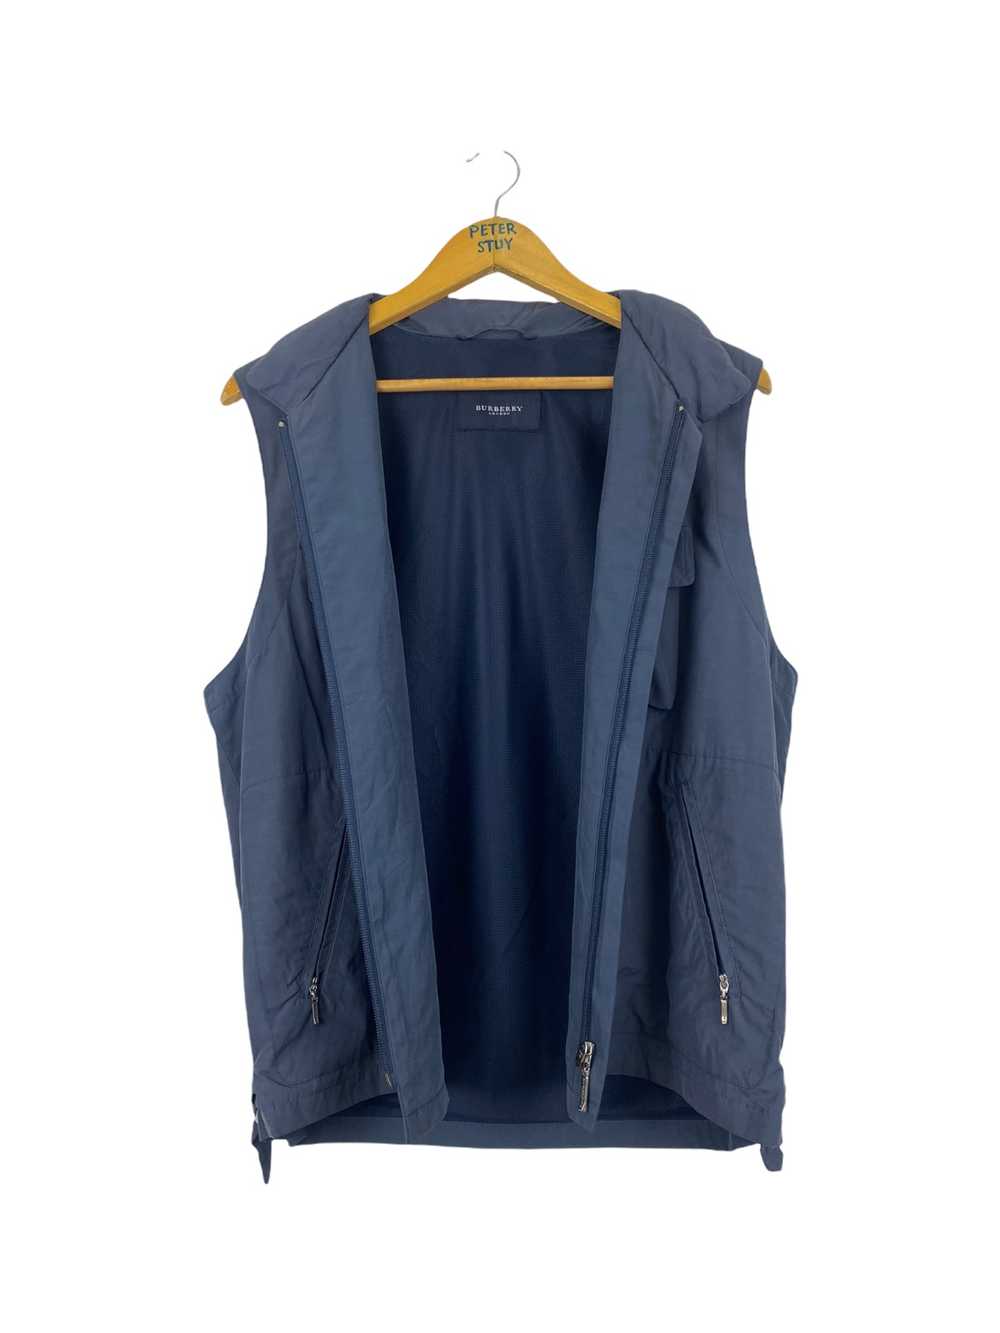 Burberry london nylon vest style - image 3